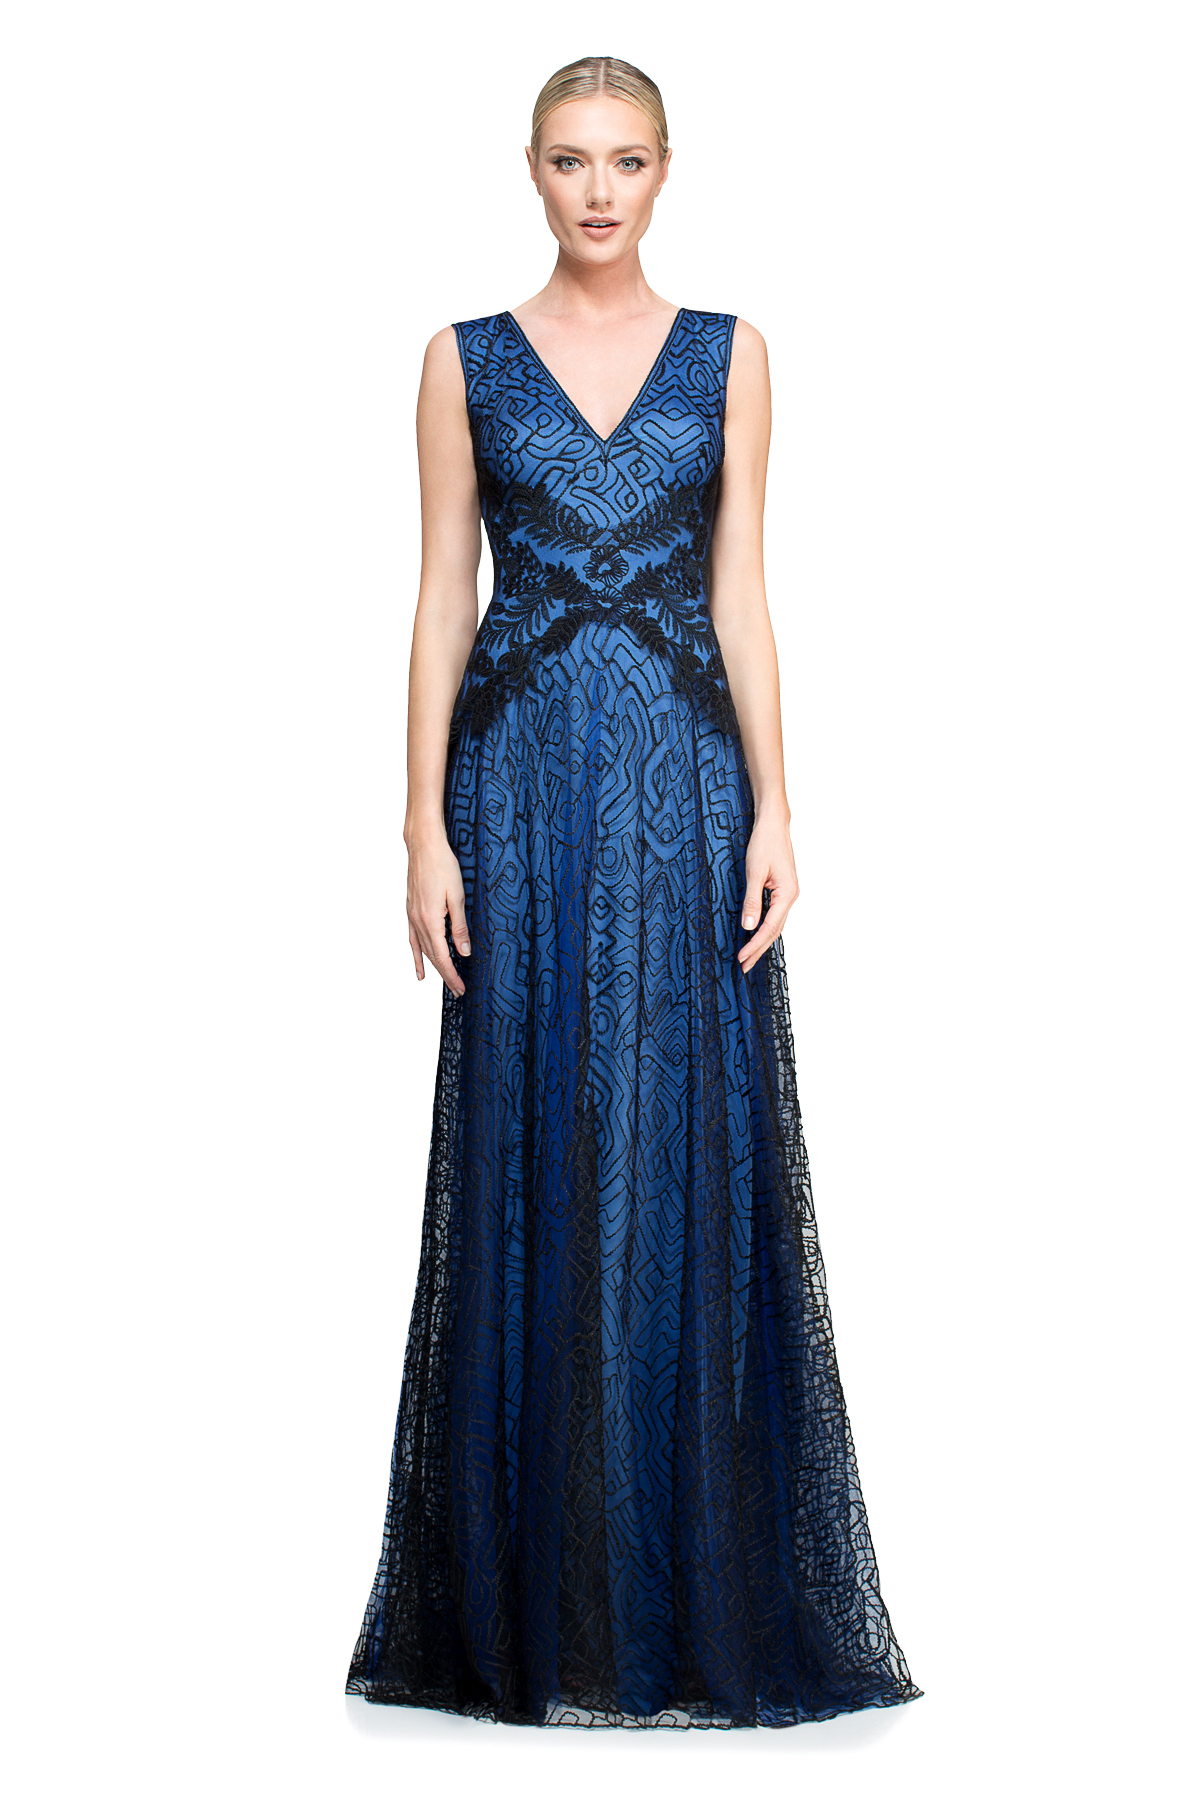 Bella Formals by Venus Cobalt/Black Beaded Evening Dress size 20 | eBay